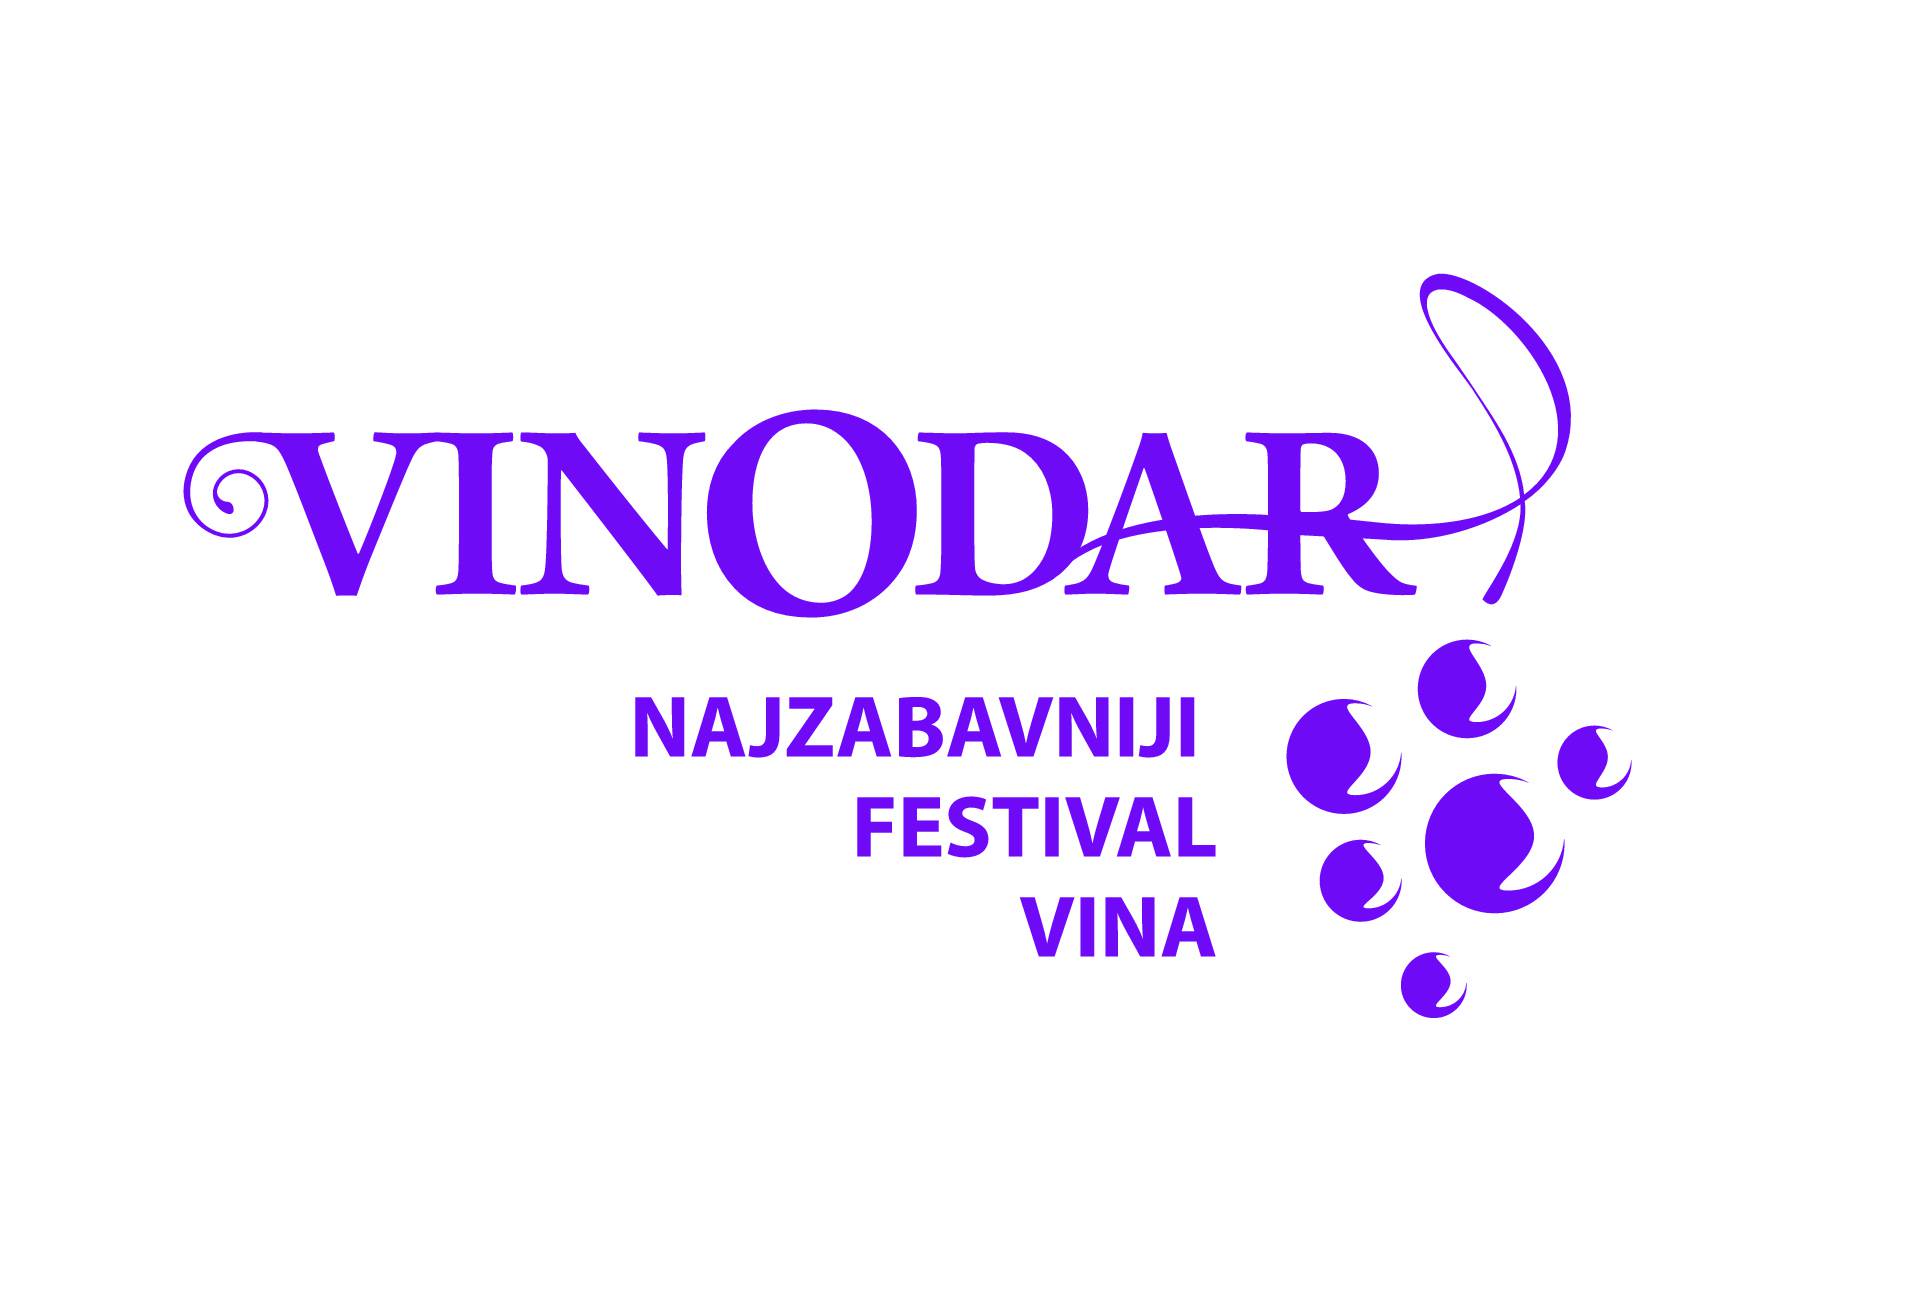 Vinodar 2019. najzabavniji festival vina u Hrvatskoj